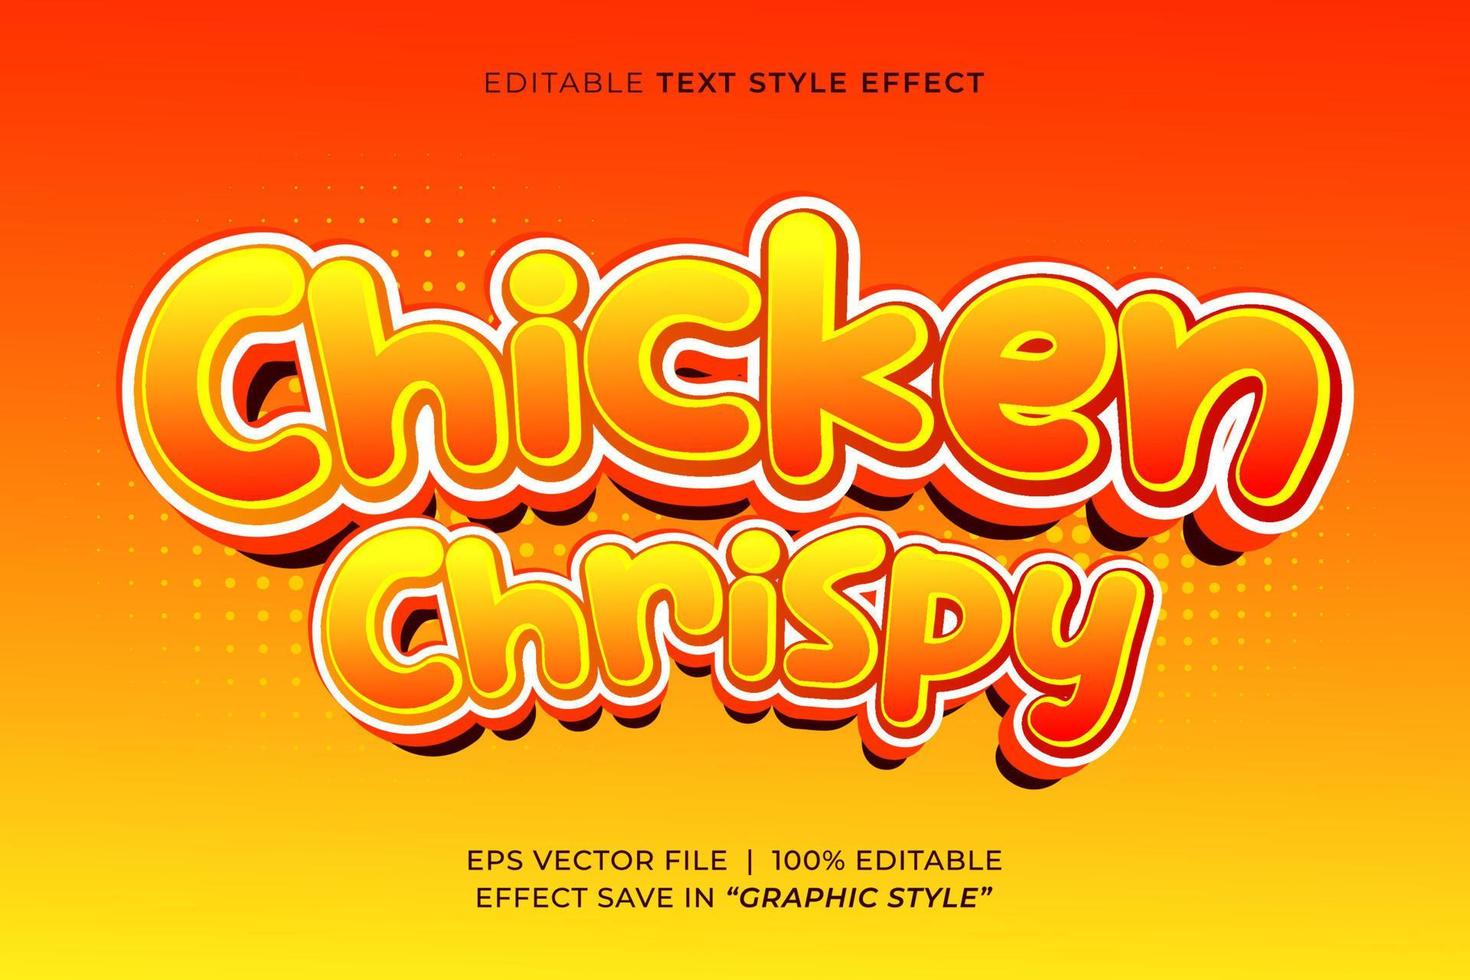 Chicken chrispy editable text effect vector